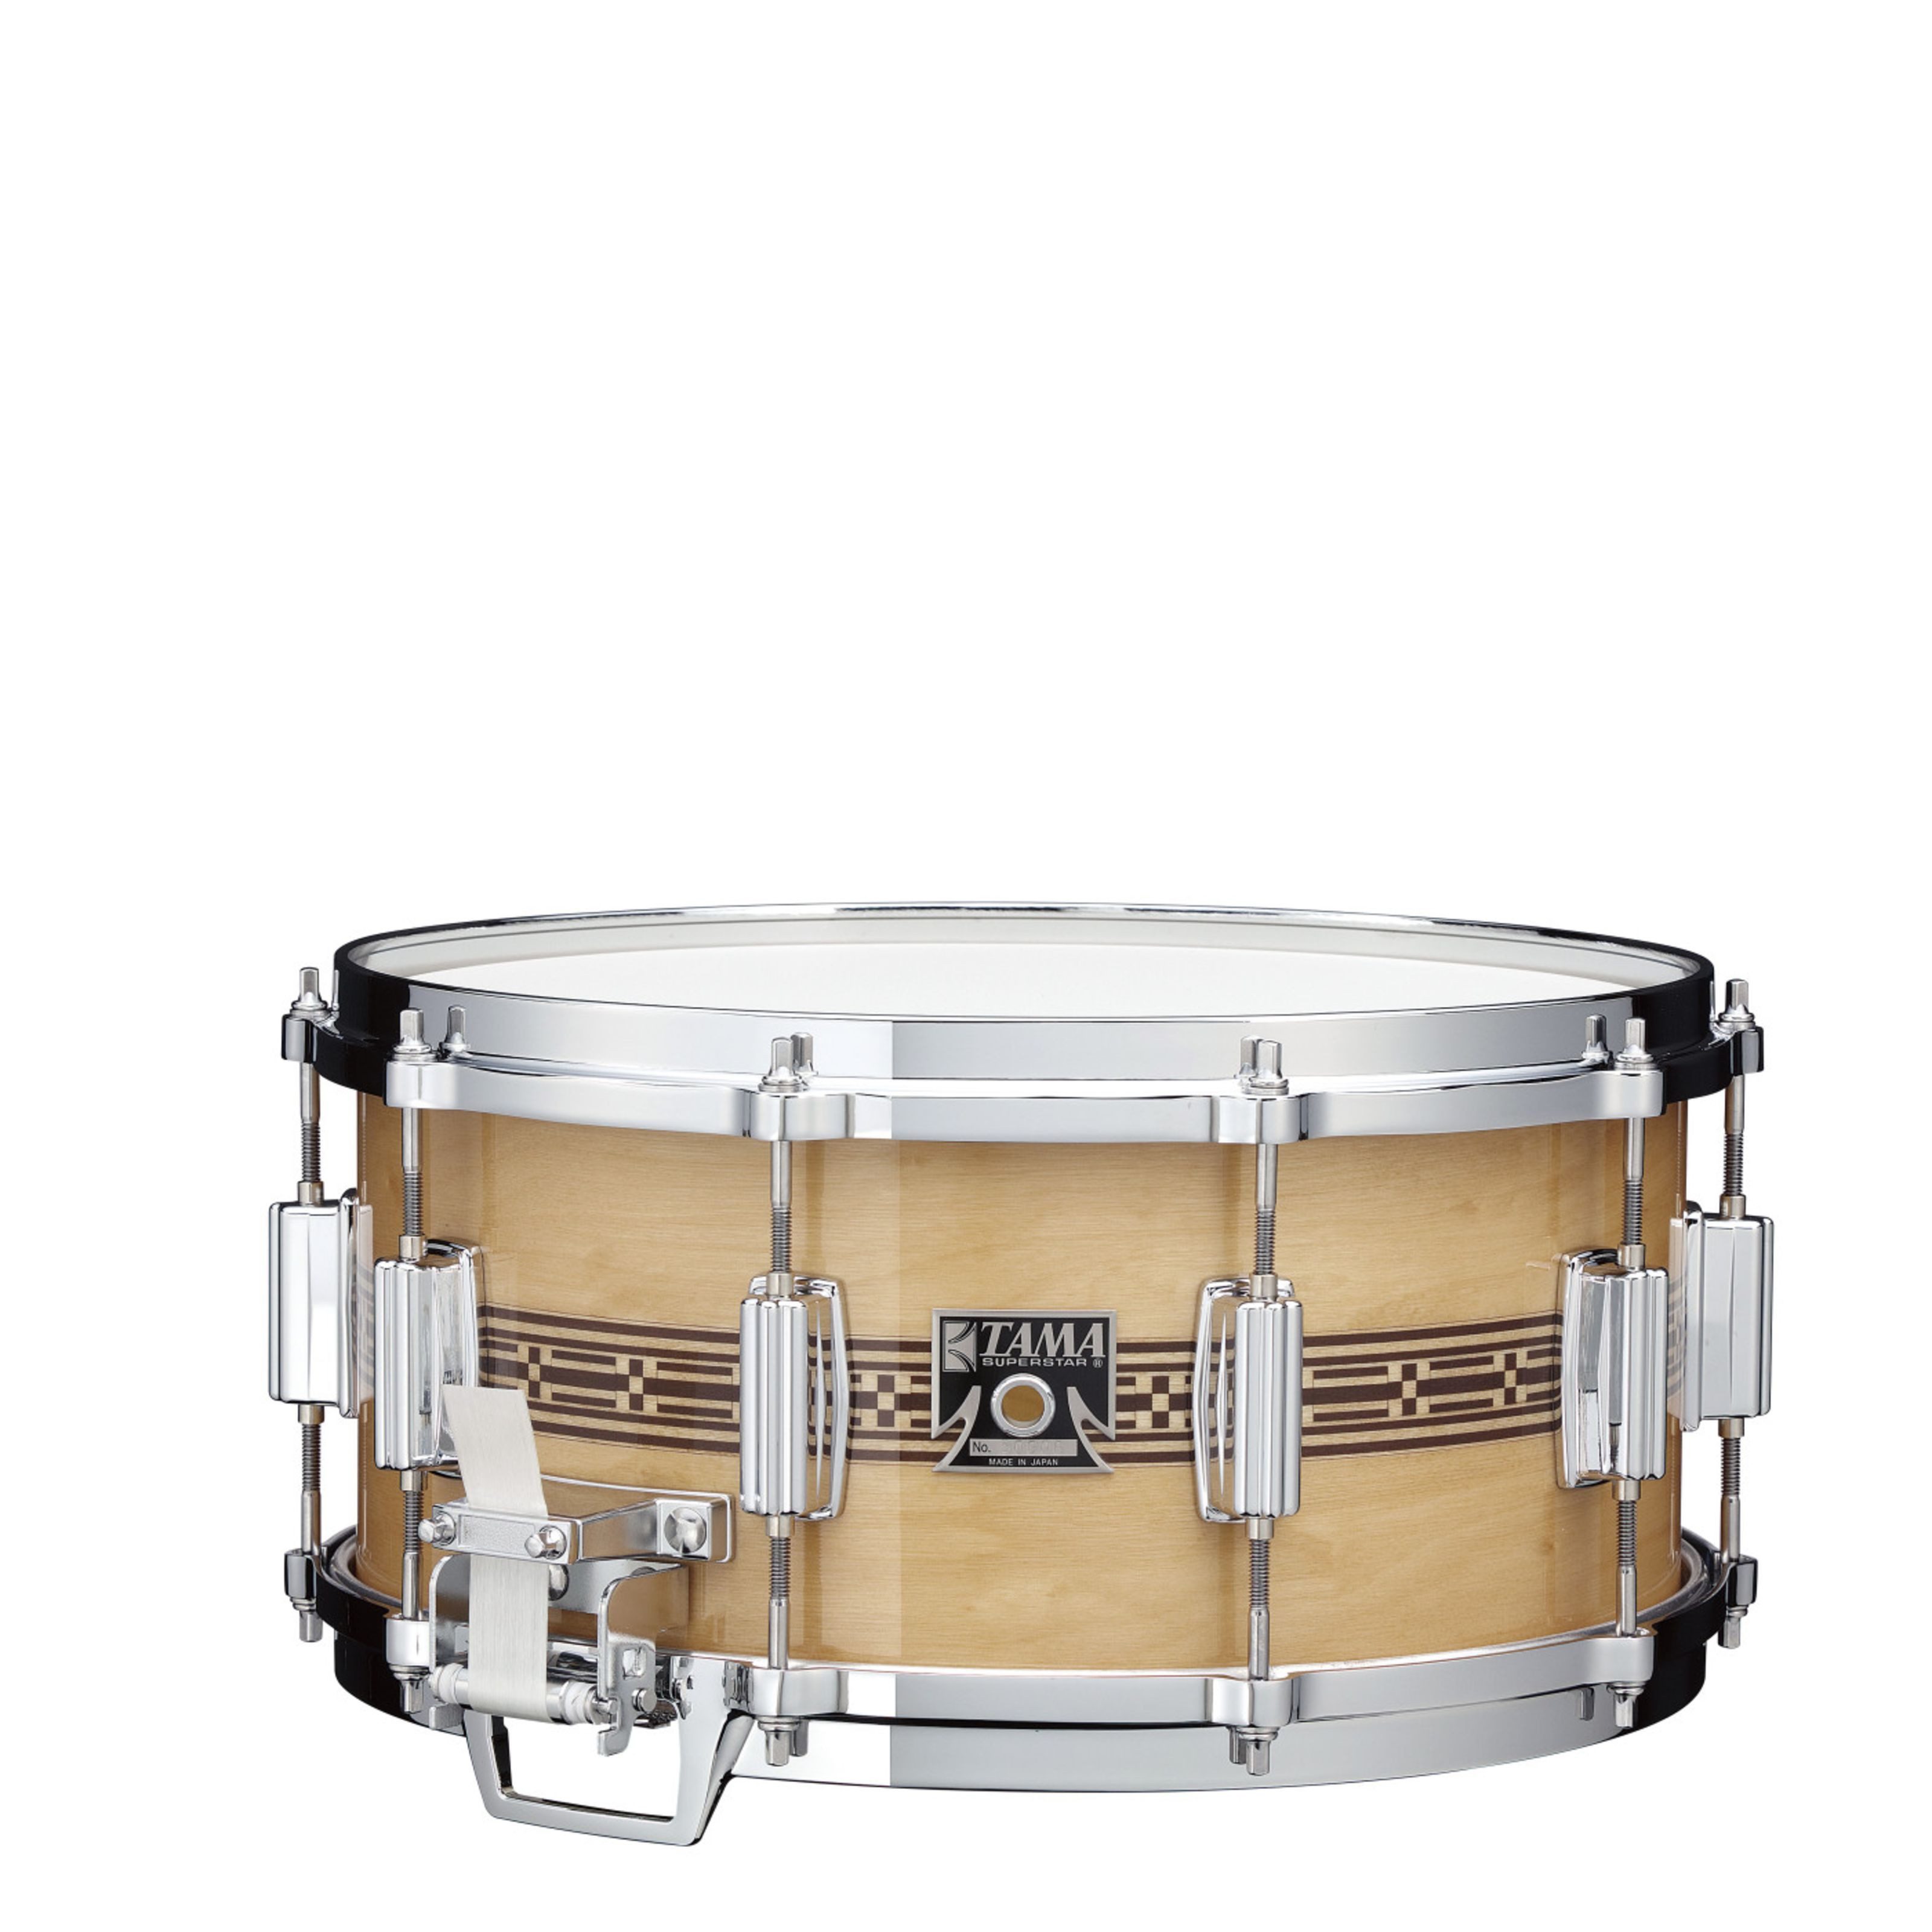 Tama Snare Drum, AW-456 Artwood Birch Mastercraft Snare 14"x6,5" - Snare Drum